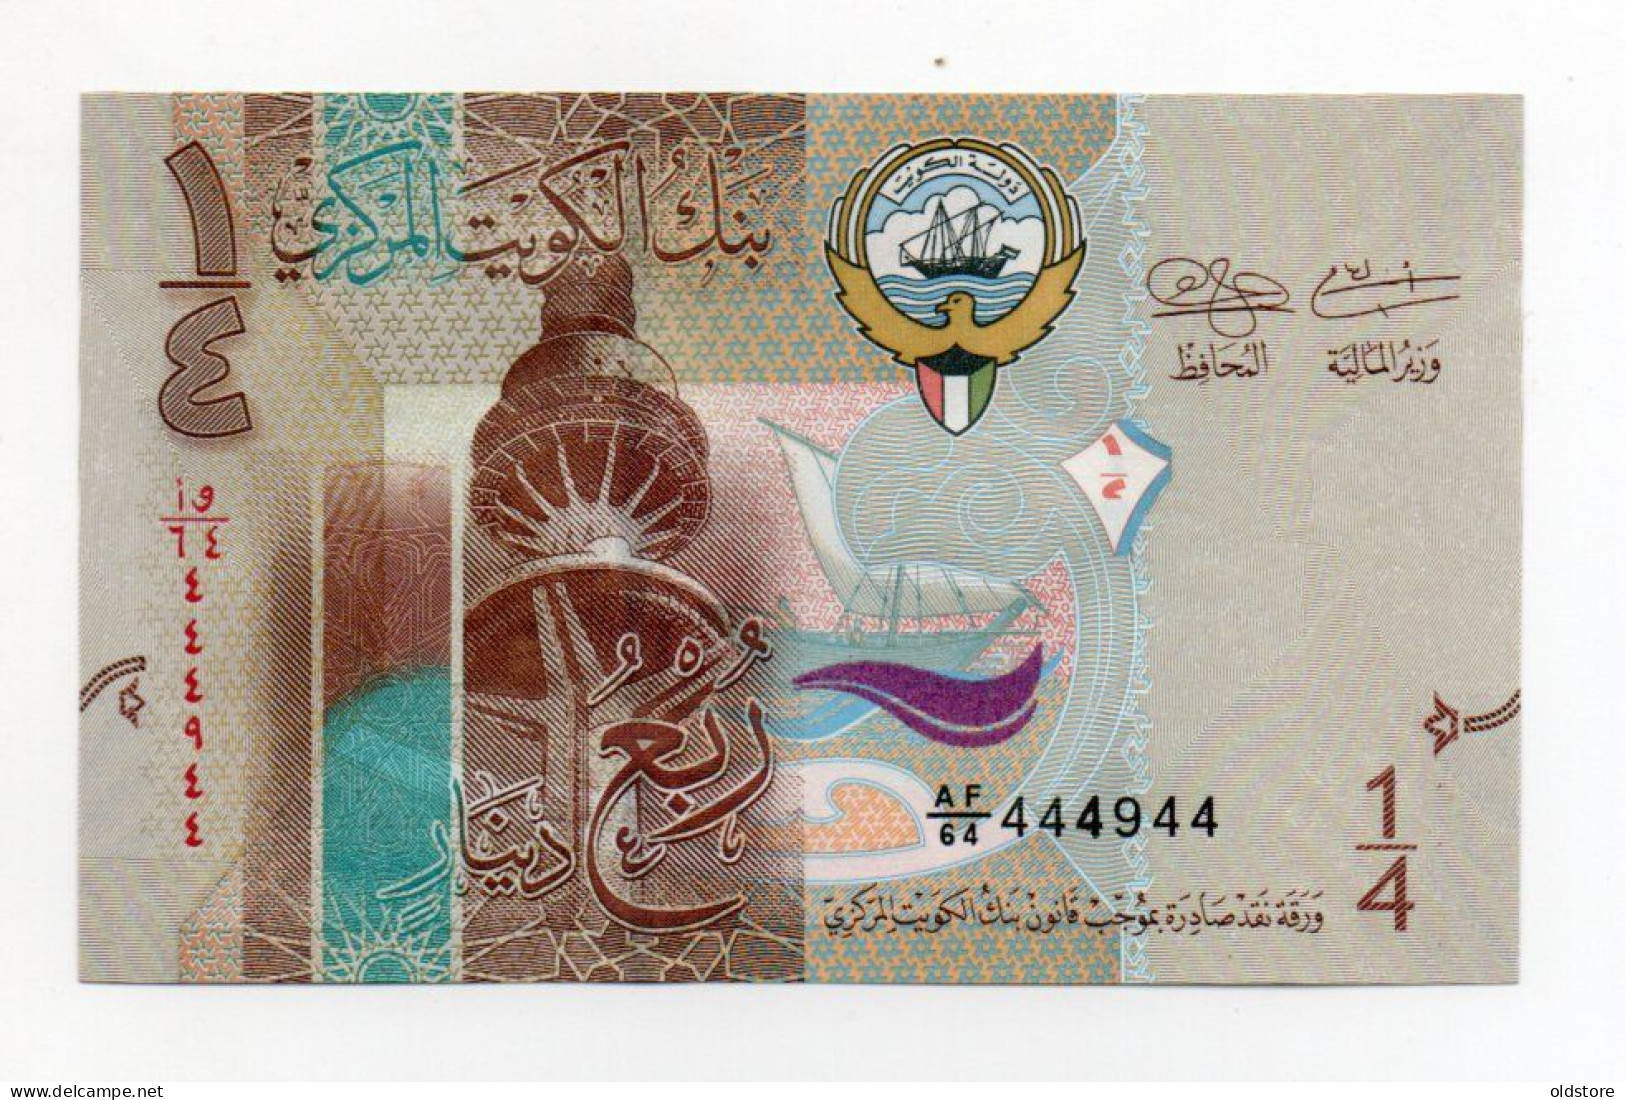 Kuwait Banknotes -  1/4 Dinar - Fancy Number 444944  - ND 2014 - UNC #1 - Kuwait